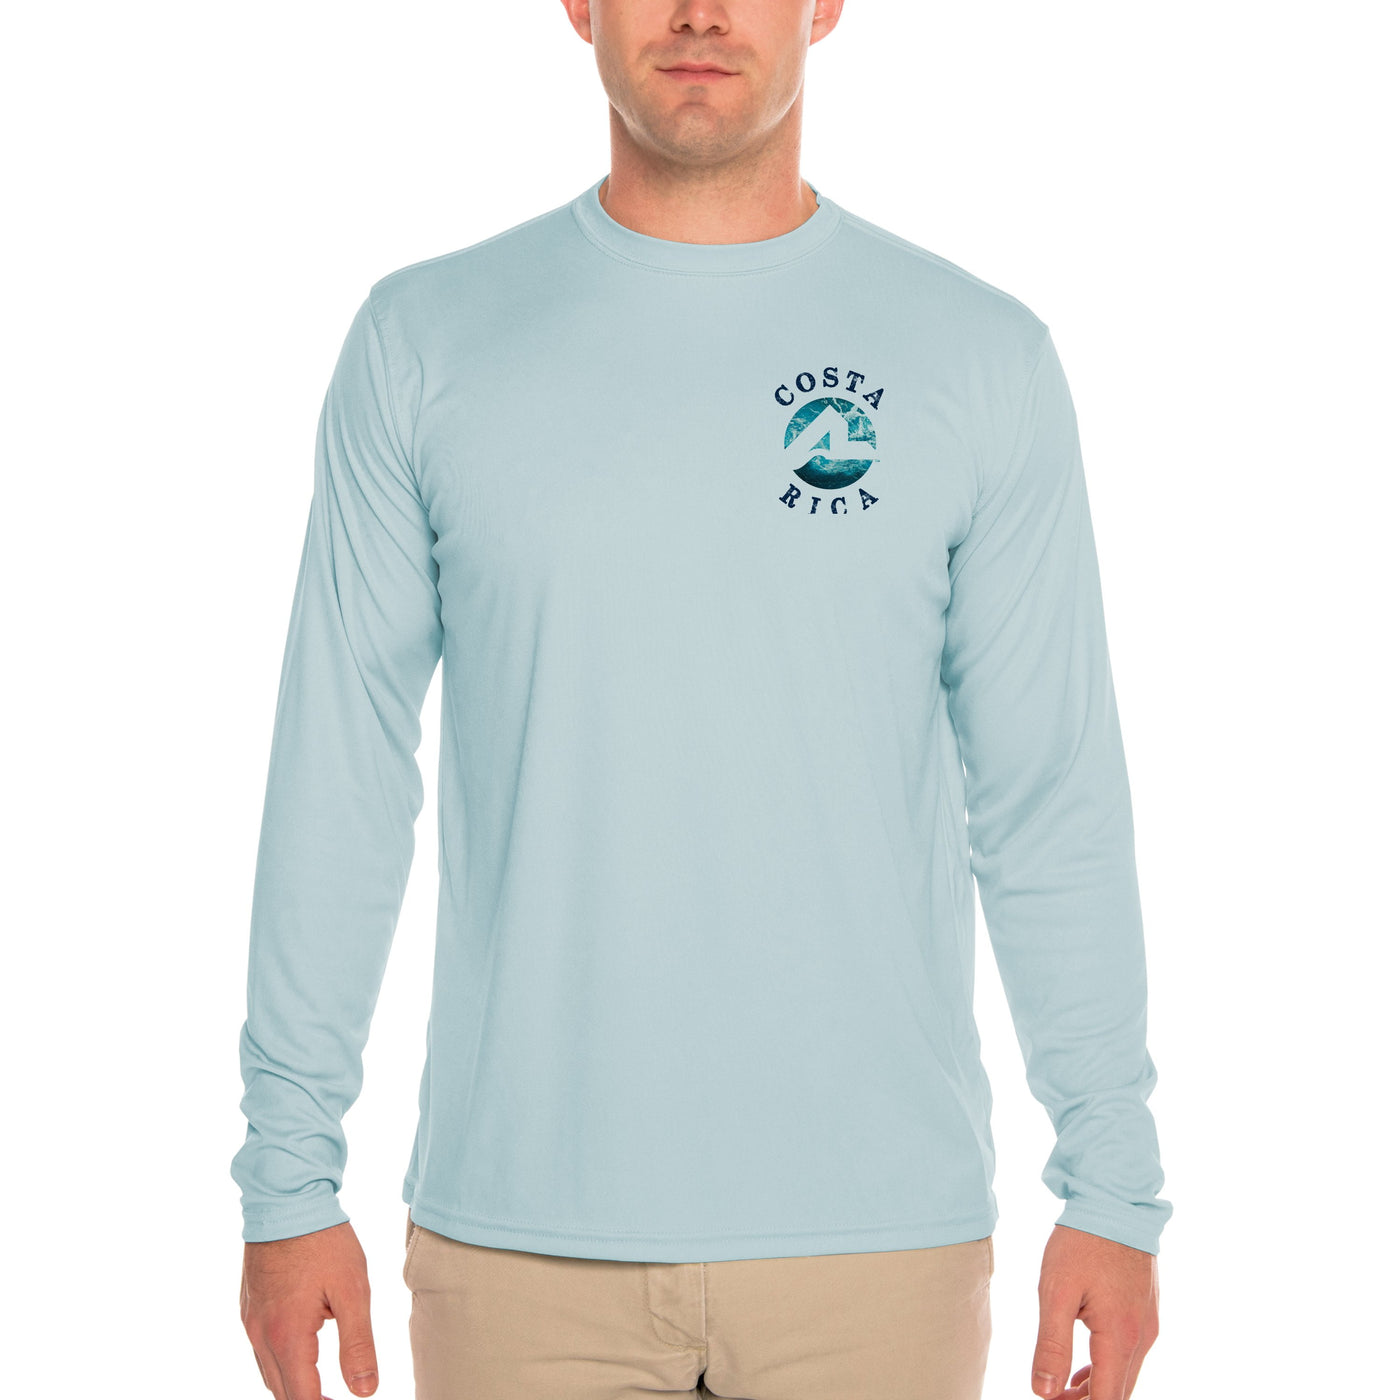 Fish Charts Costa Rica Men's UPF 50+ Long Sleeve T-Shirt